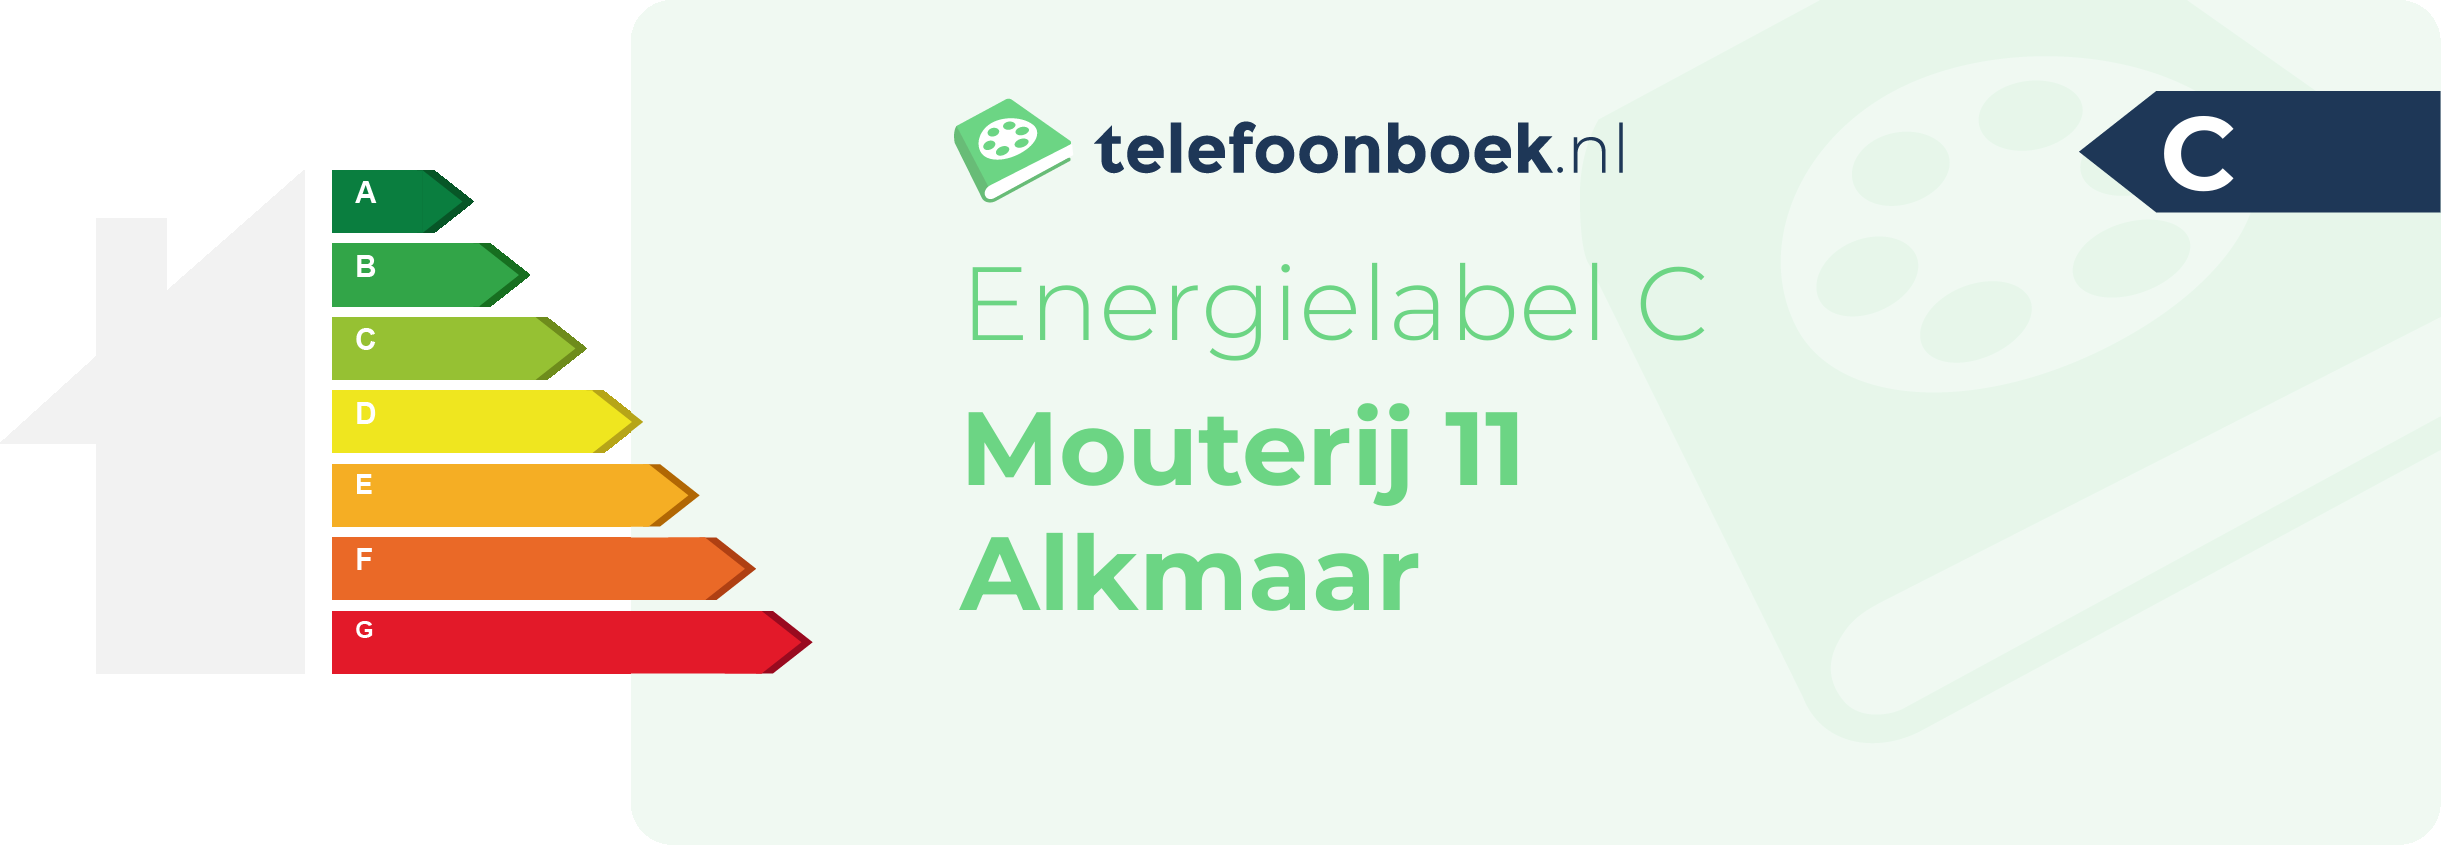 Energielabel Mouterij 11 Alkmaar